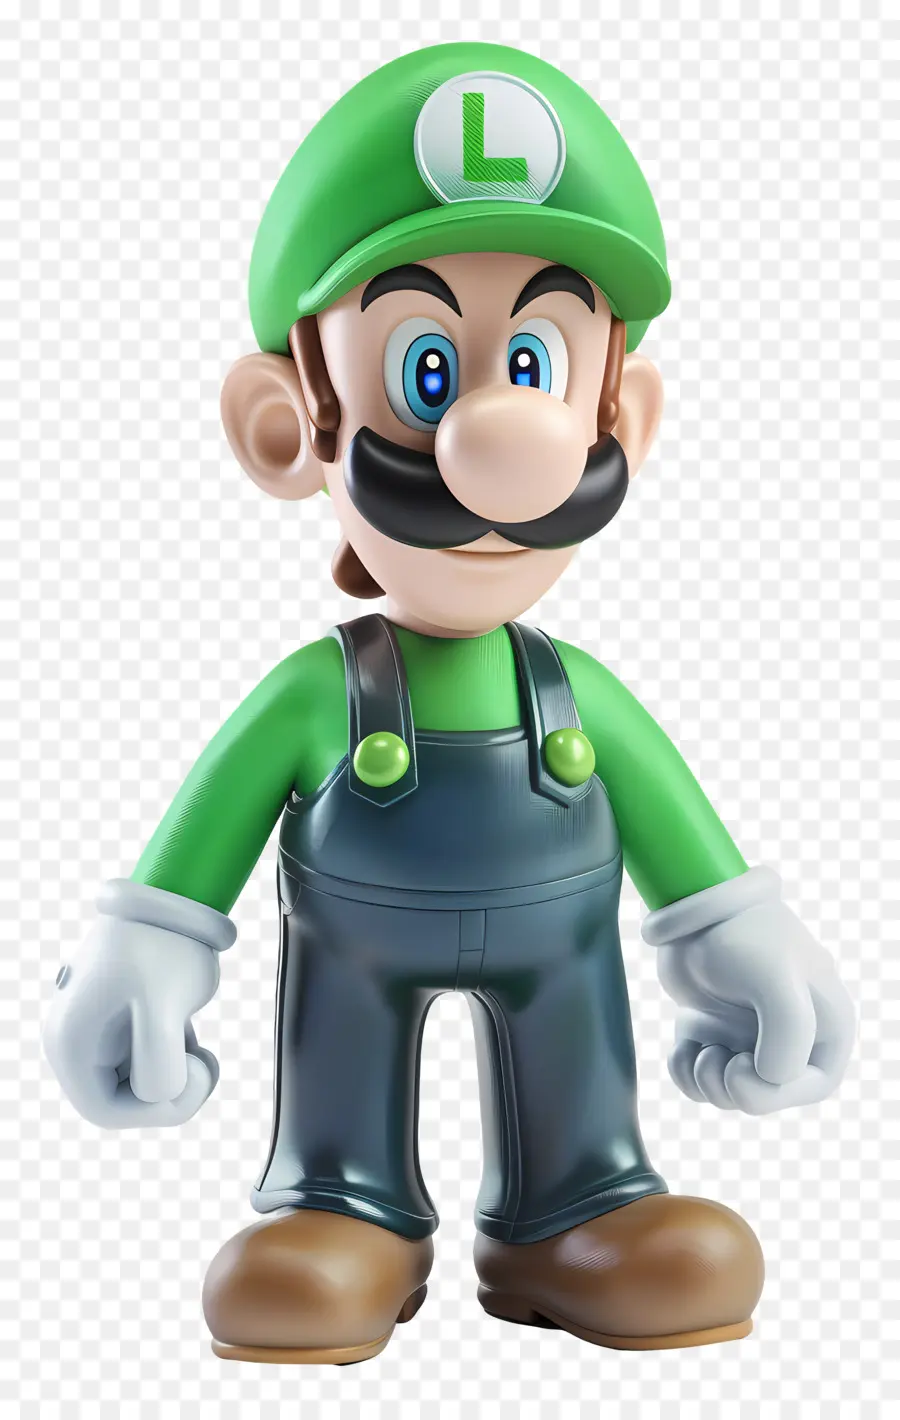 Super Mario - Plastik -Mario -Figur im Denken von Pose